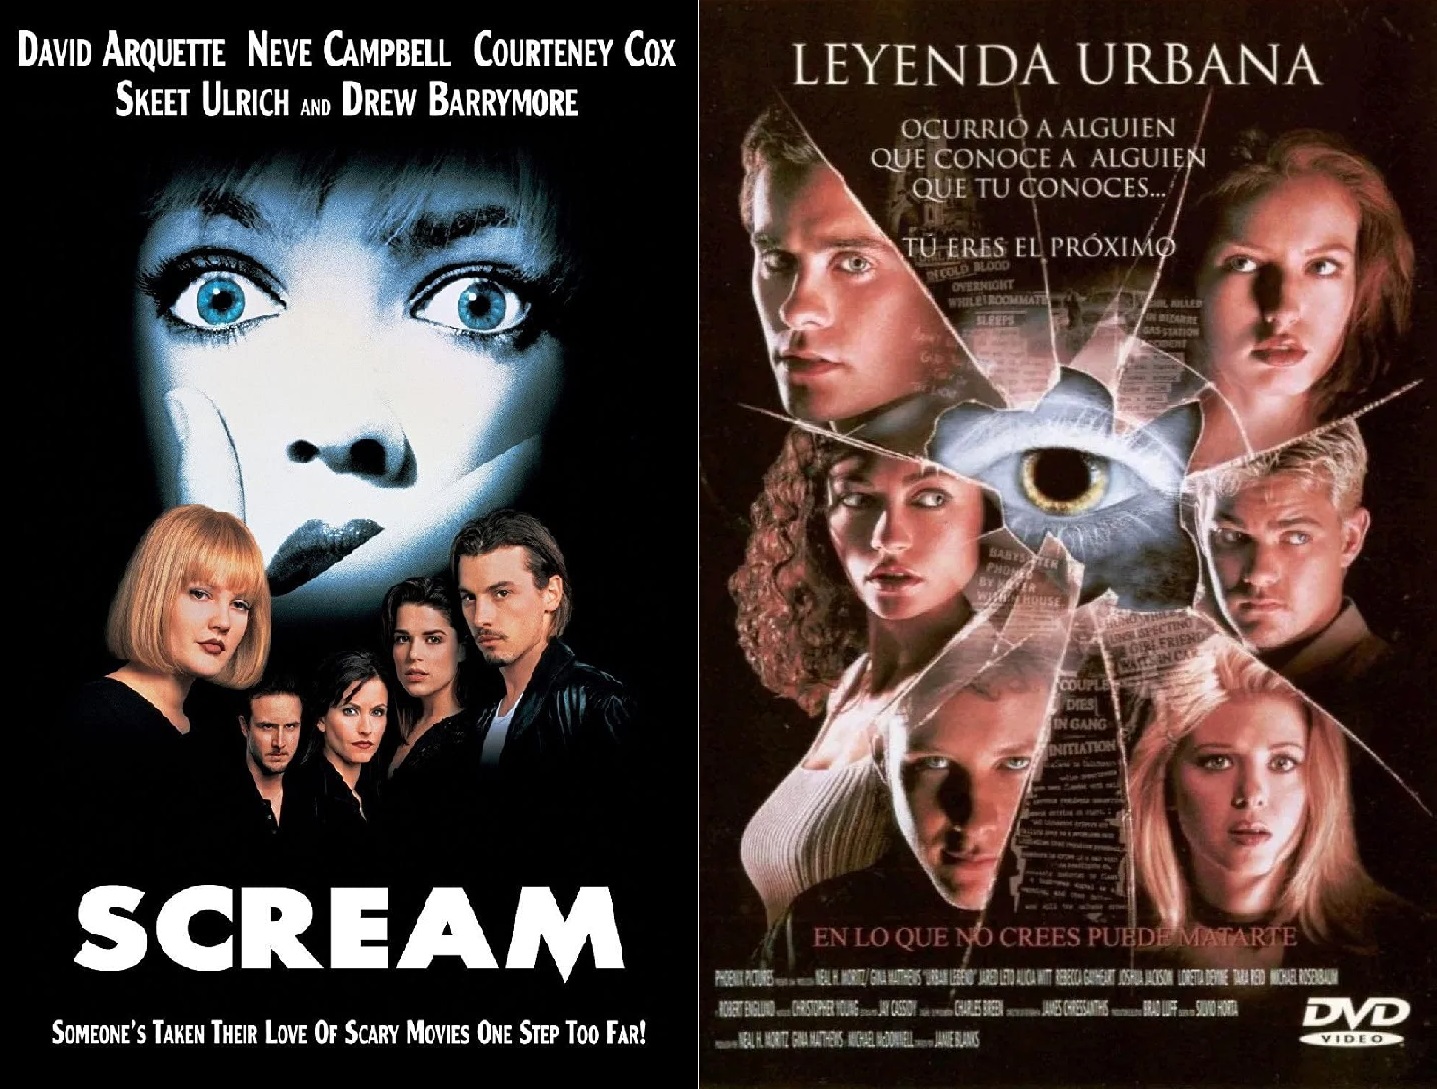 Scream vs. Leyenda Urbana terror